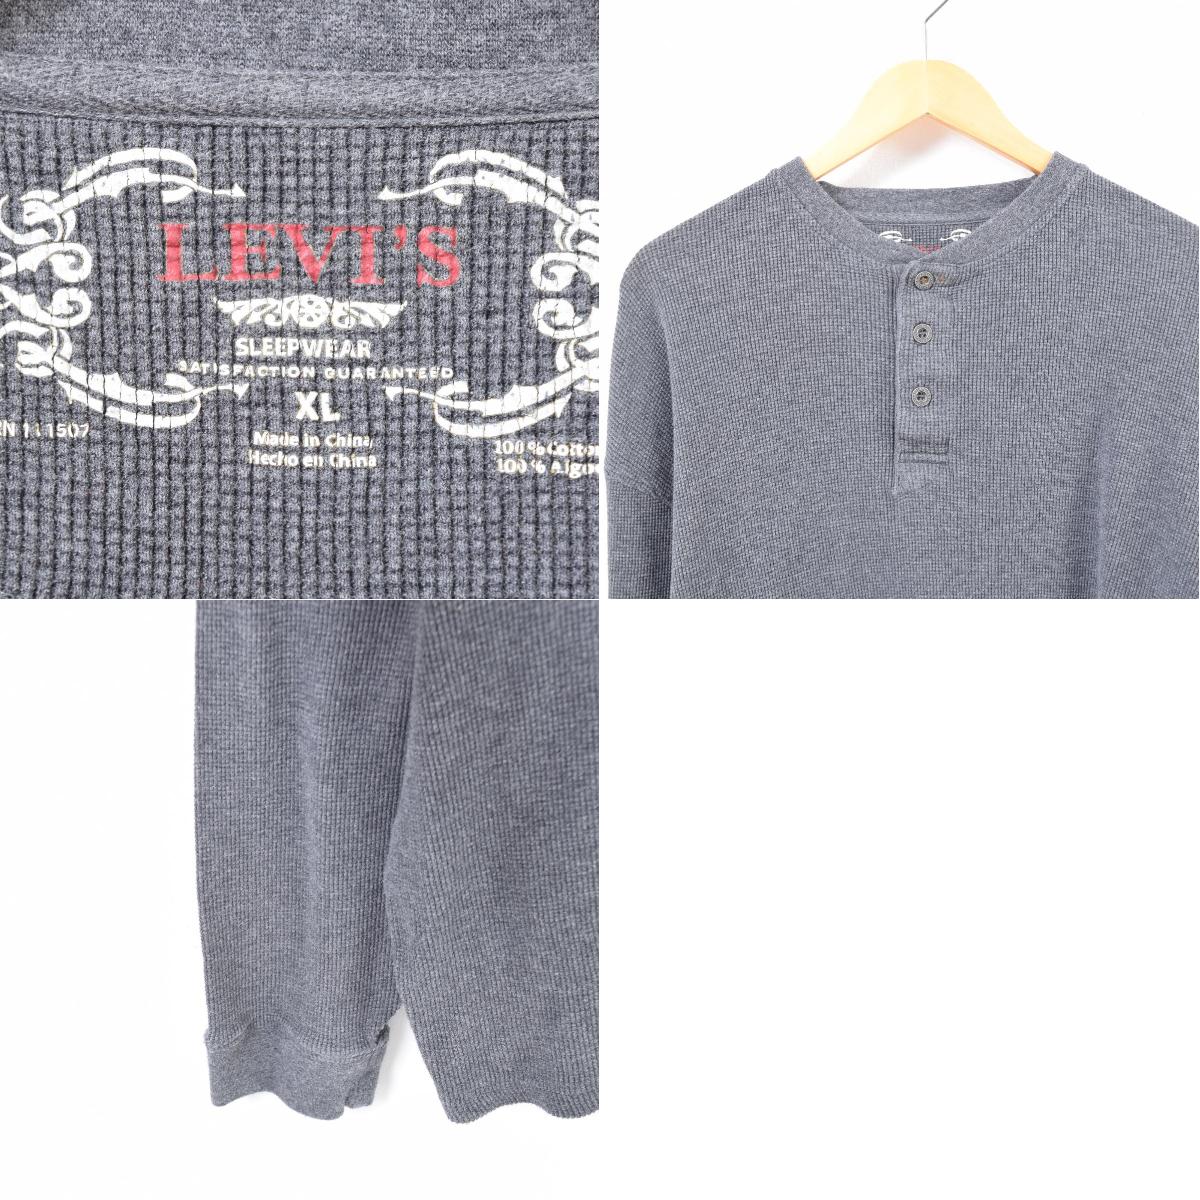 levis thermal wear